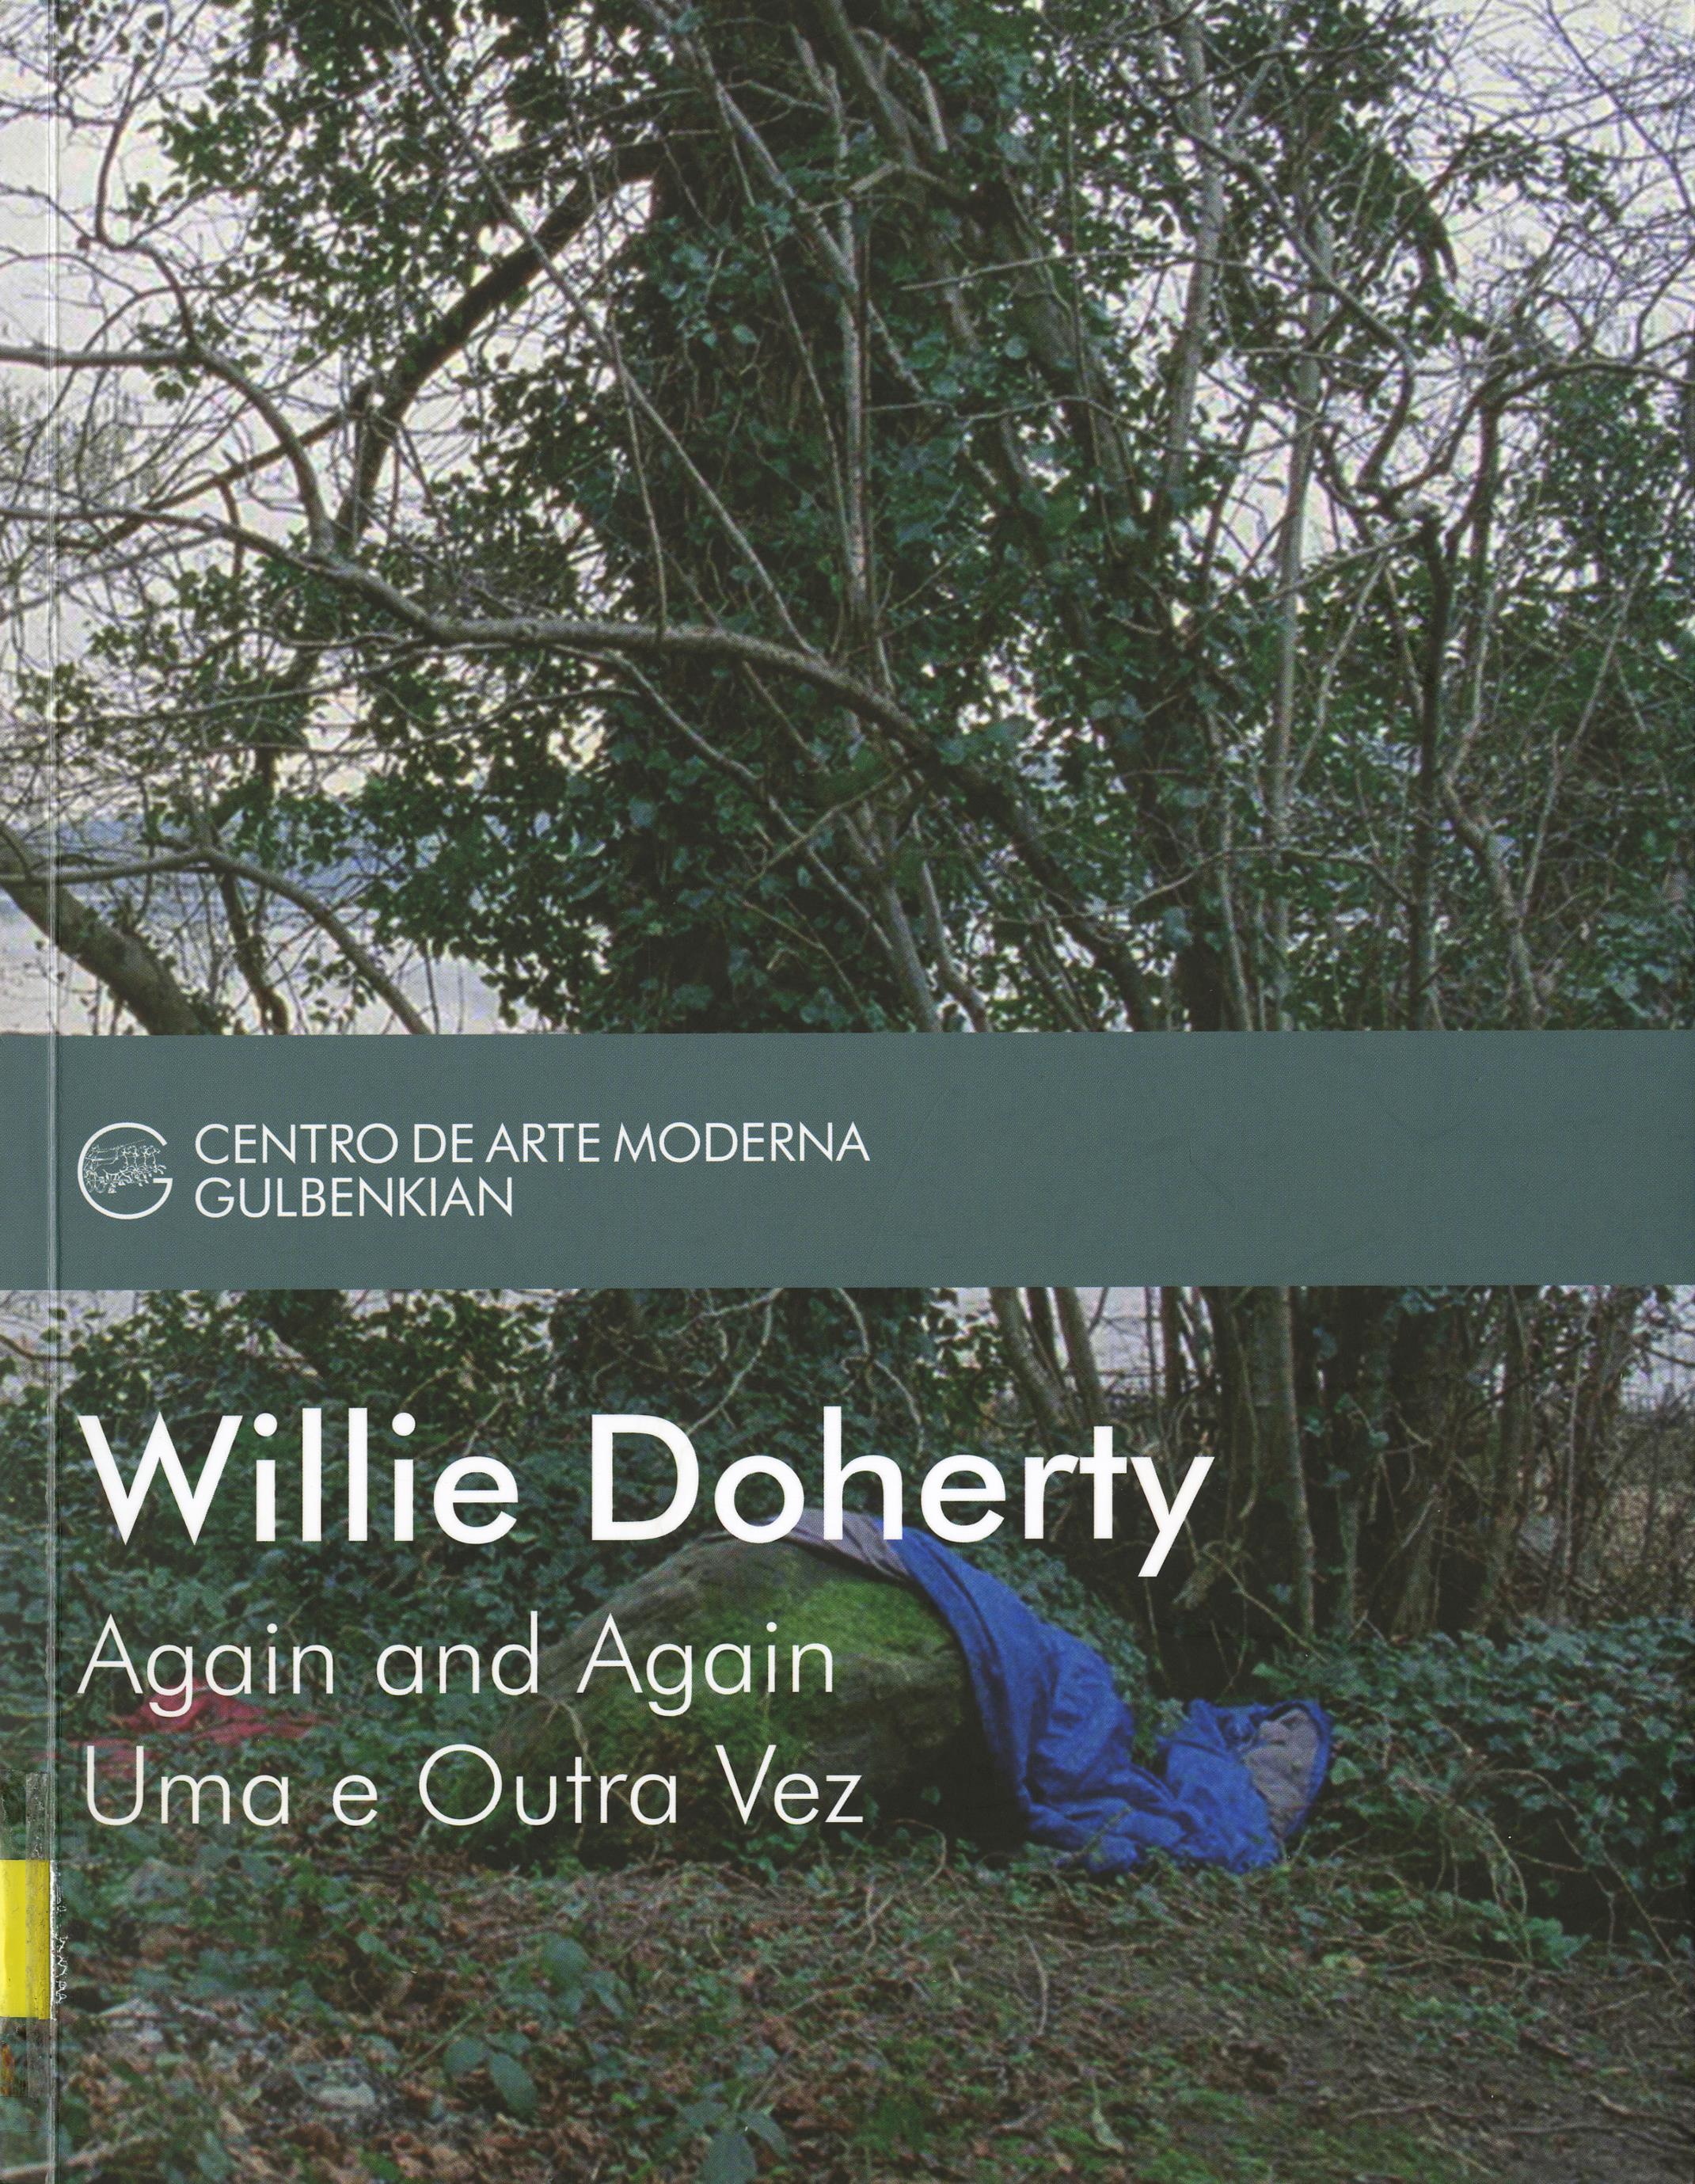 Willie Doherty. Uma e Outra Vez / Again and Again